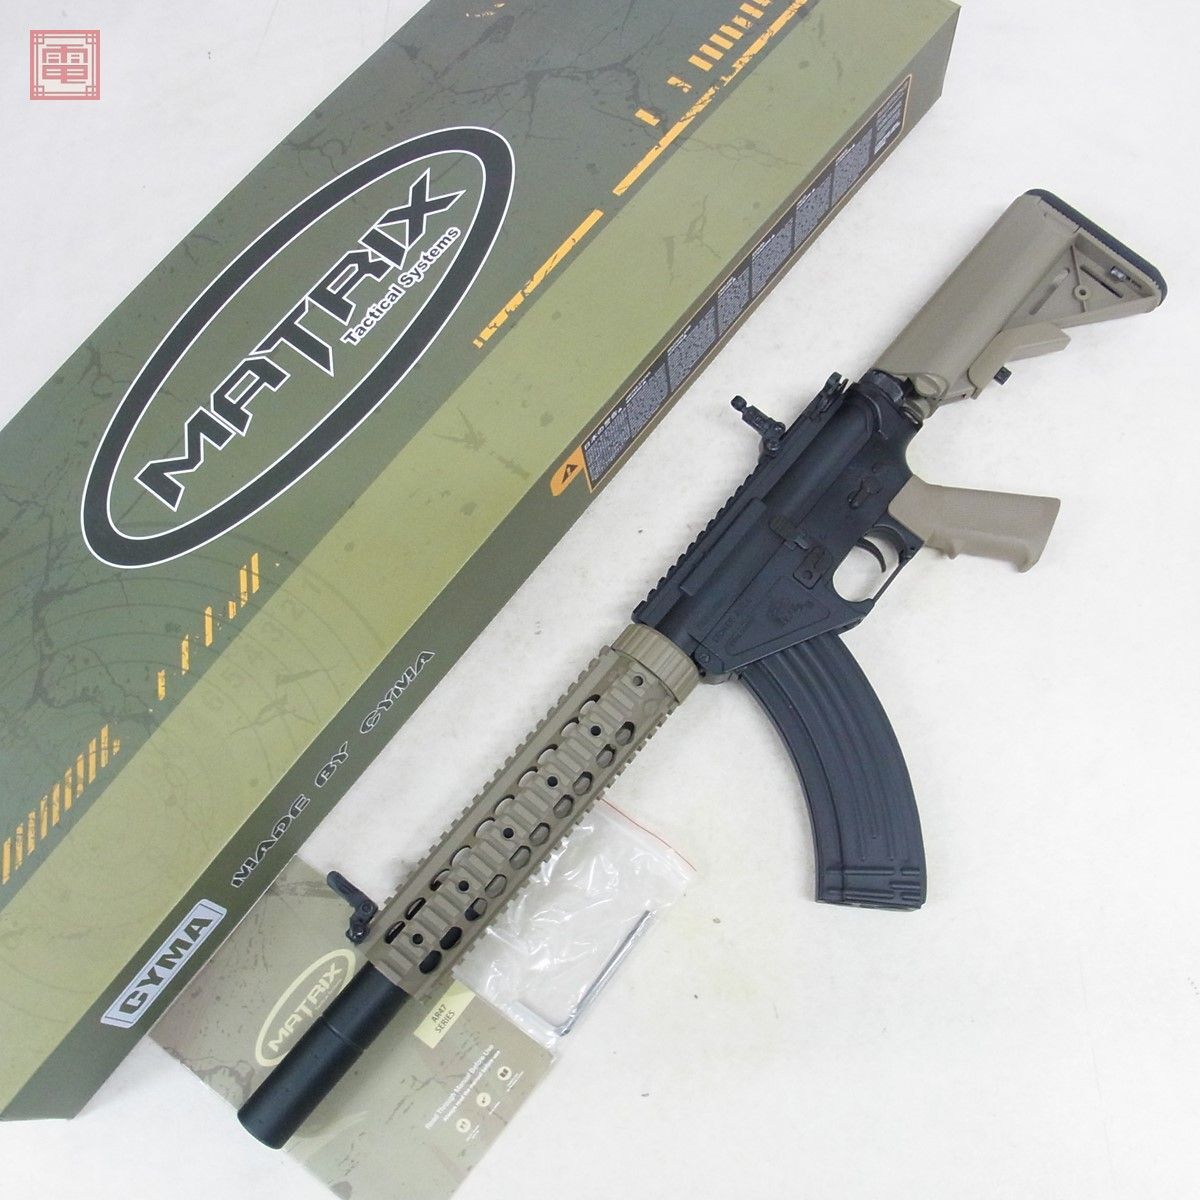 MATRIX / CYMA full metal electric gun KAC SR-47 FF SD silencer Nights Matrix present condition goods [40